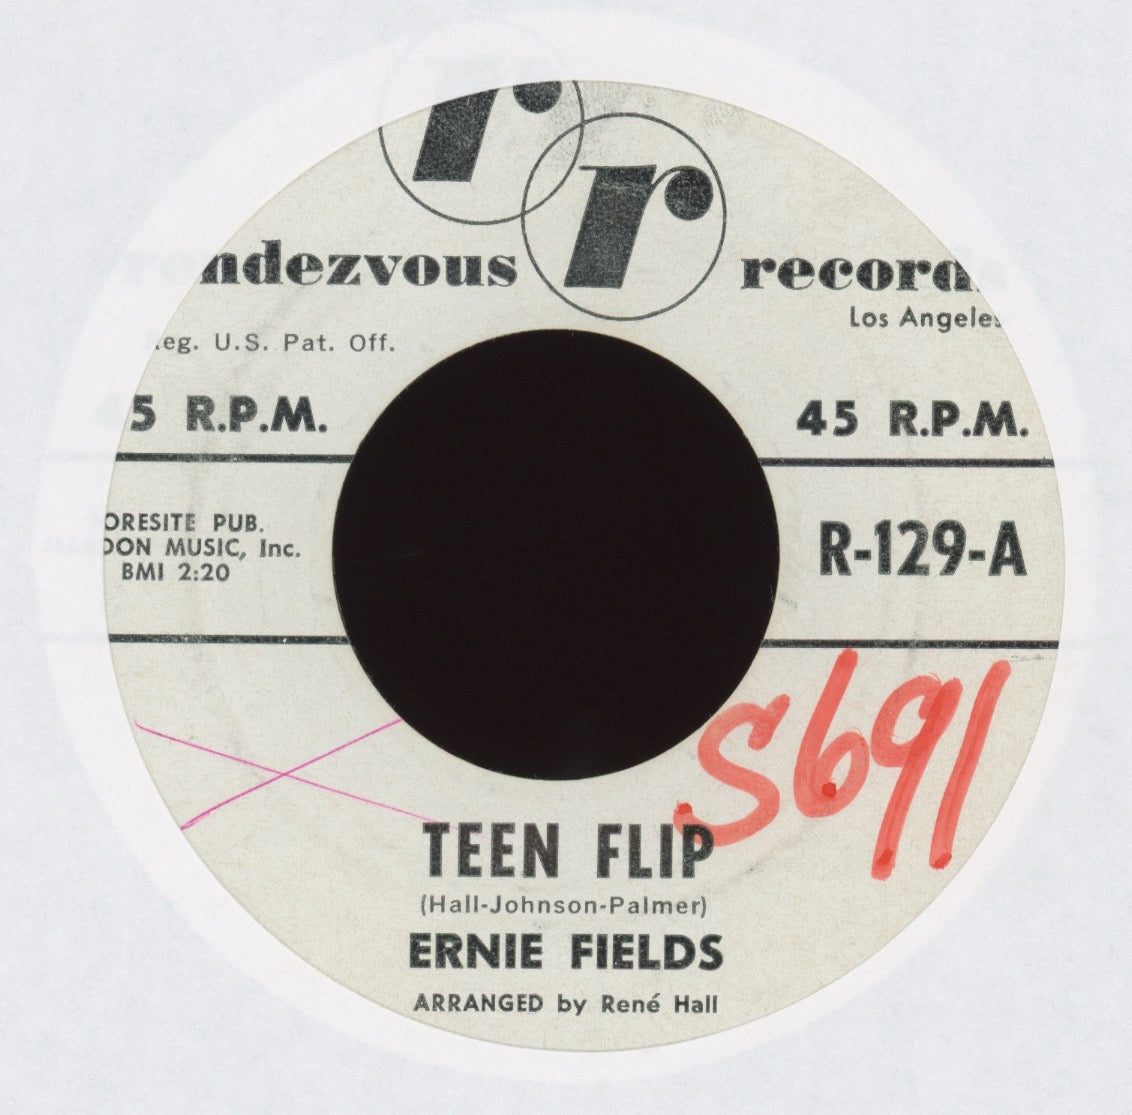 Ernie Fields - Teen Flip  on Rendezvous Promo